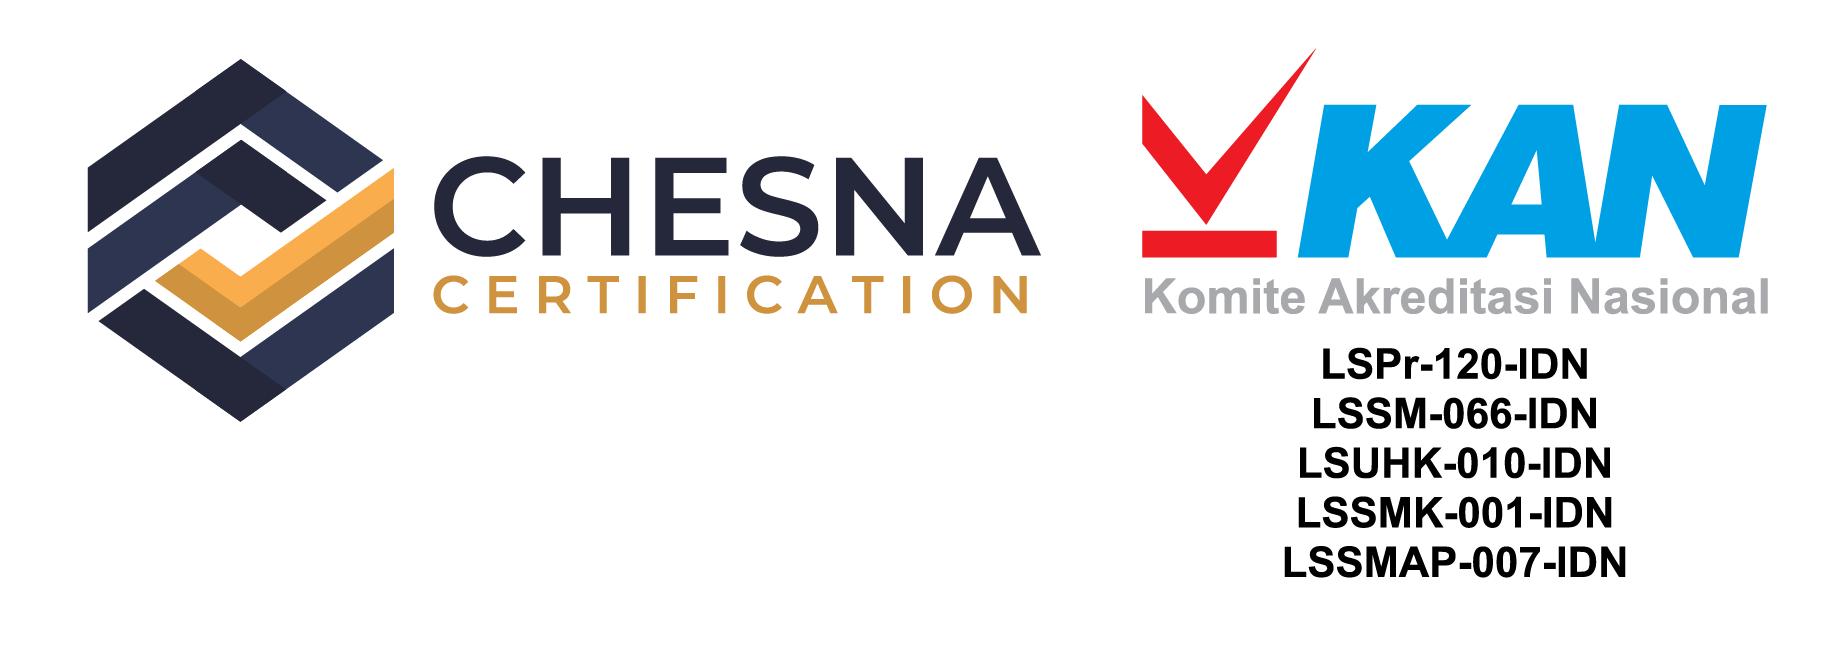 Chesna Certification